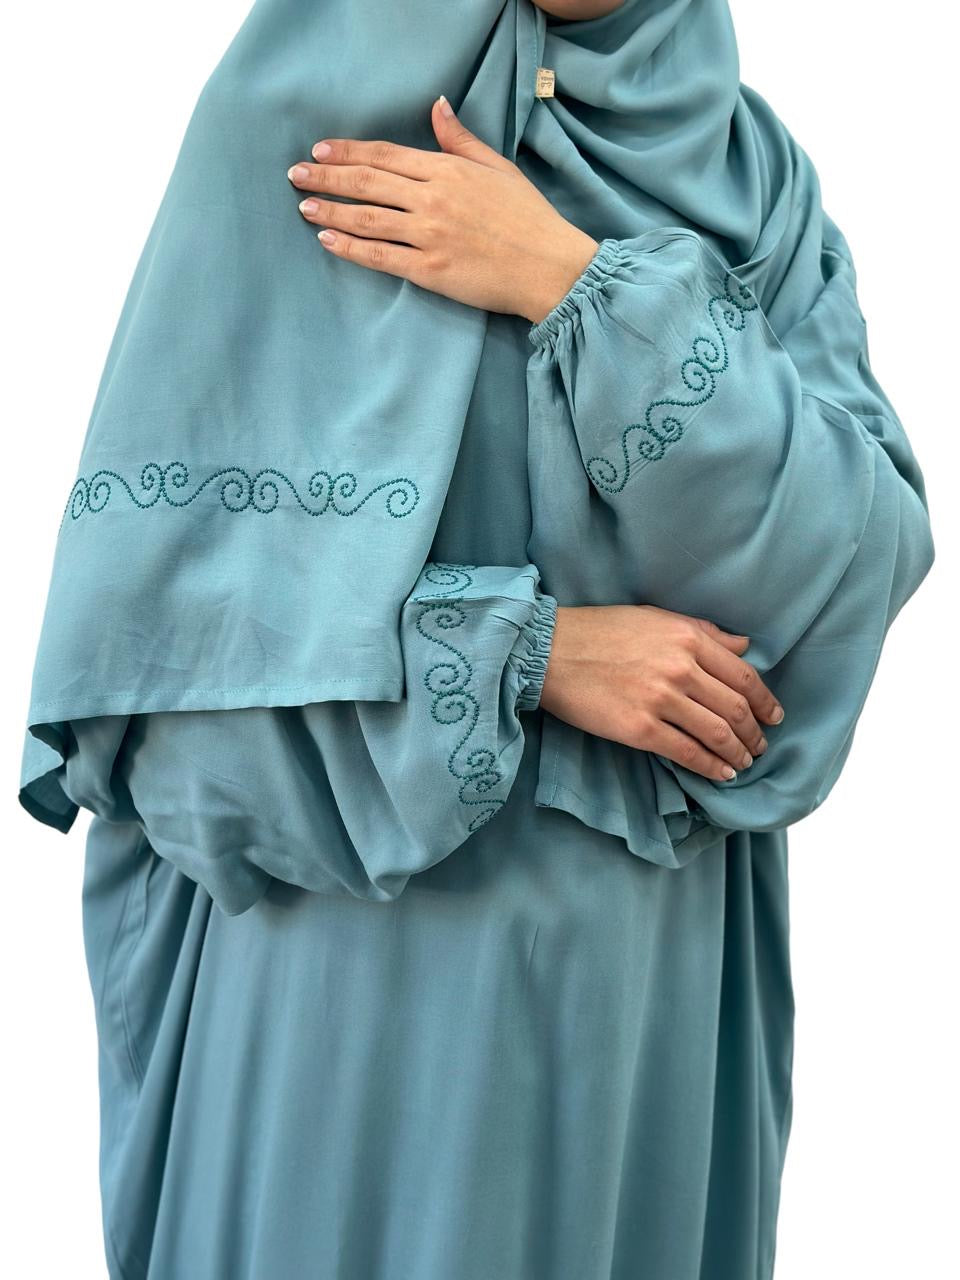 Prayer Dress Embroidered FAN ALDARZA TAQUEEN